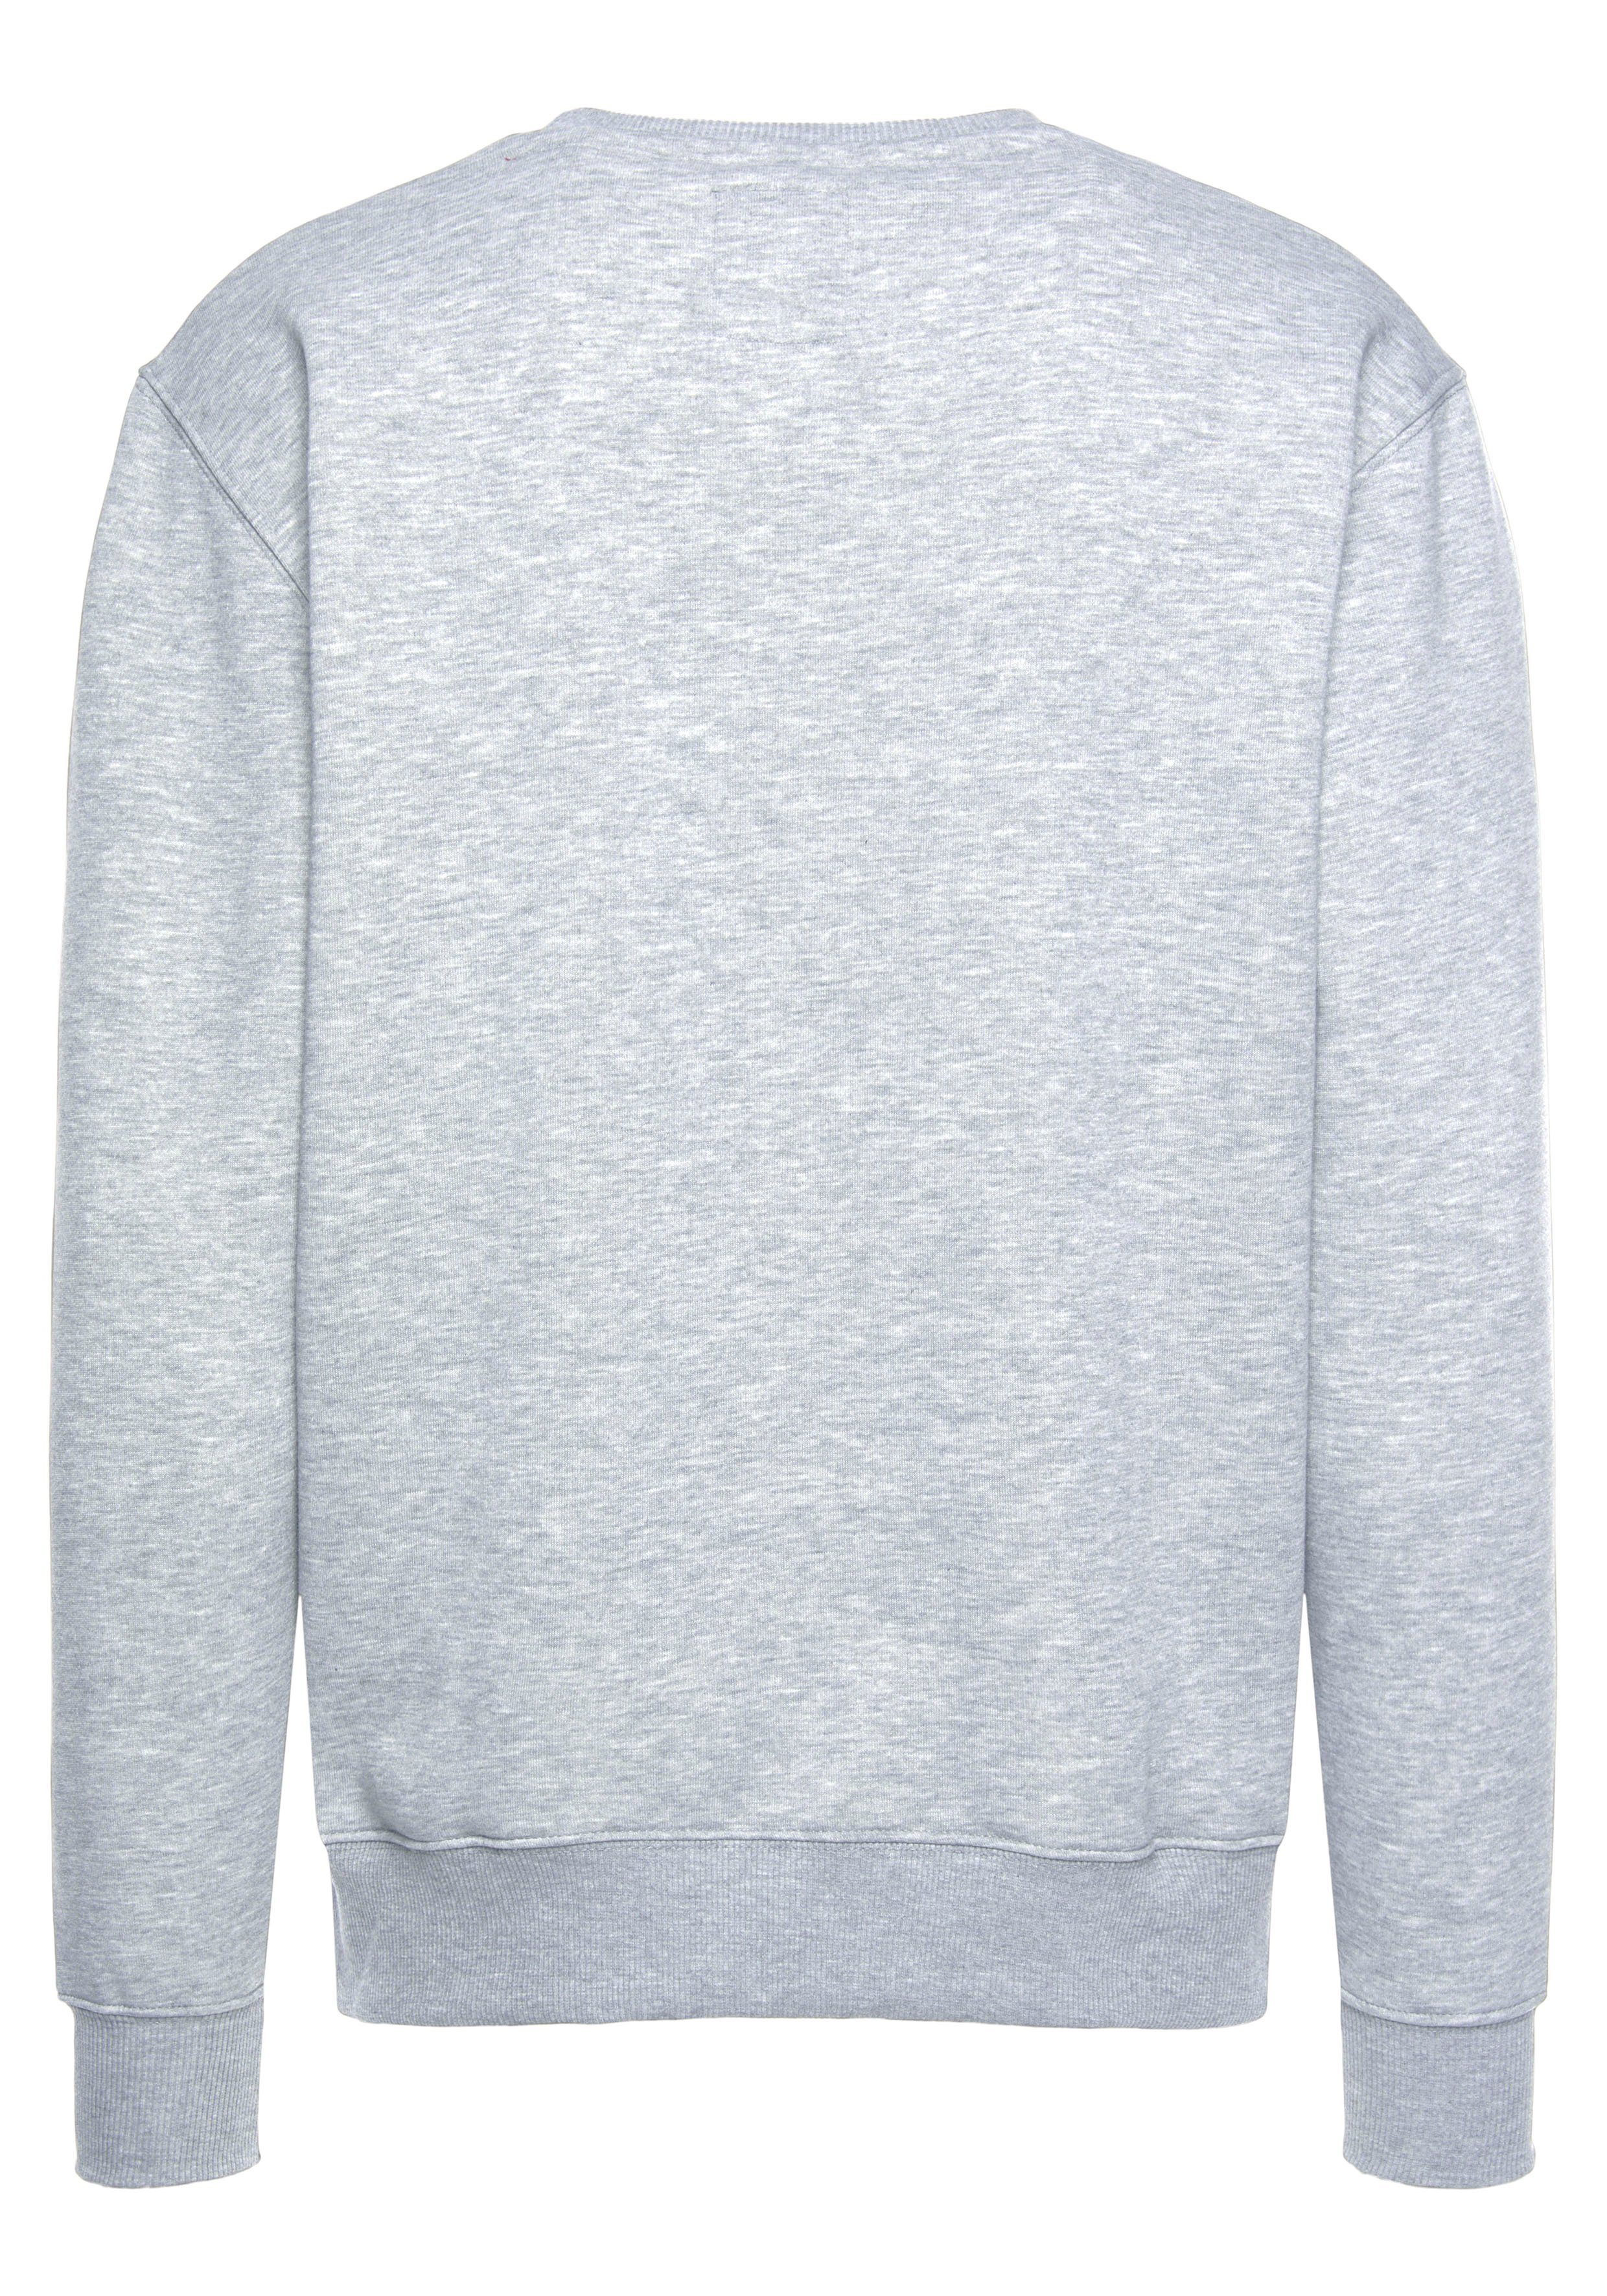 grey Sweater Sweatshirt Basic Alpha heather Industries